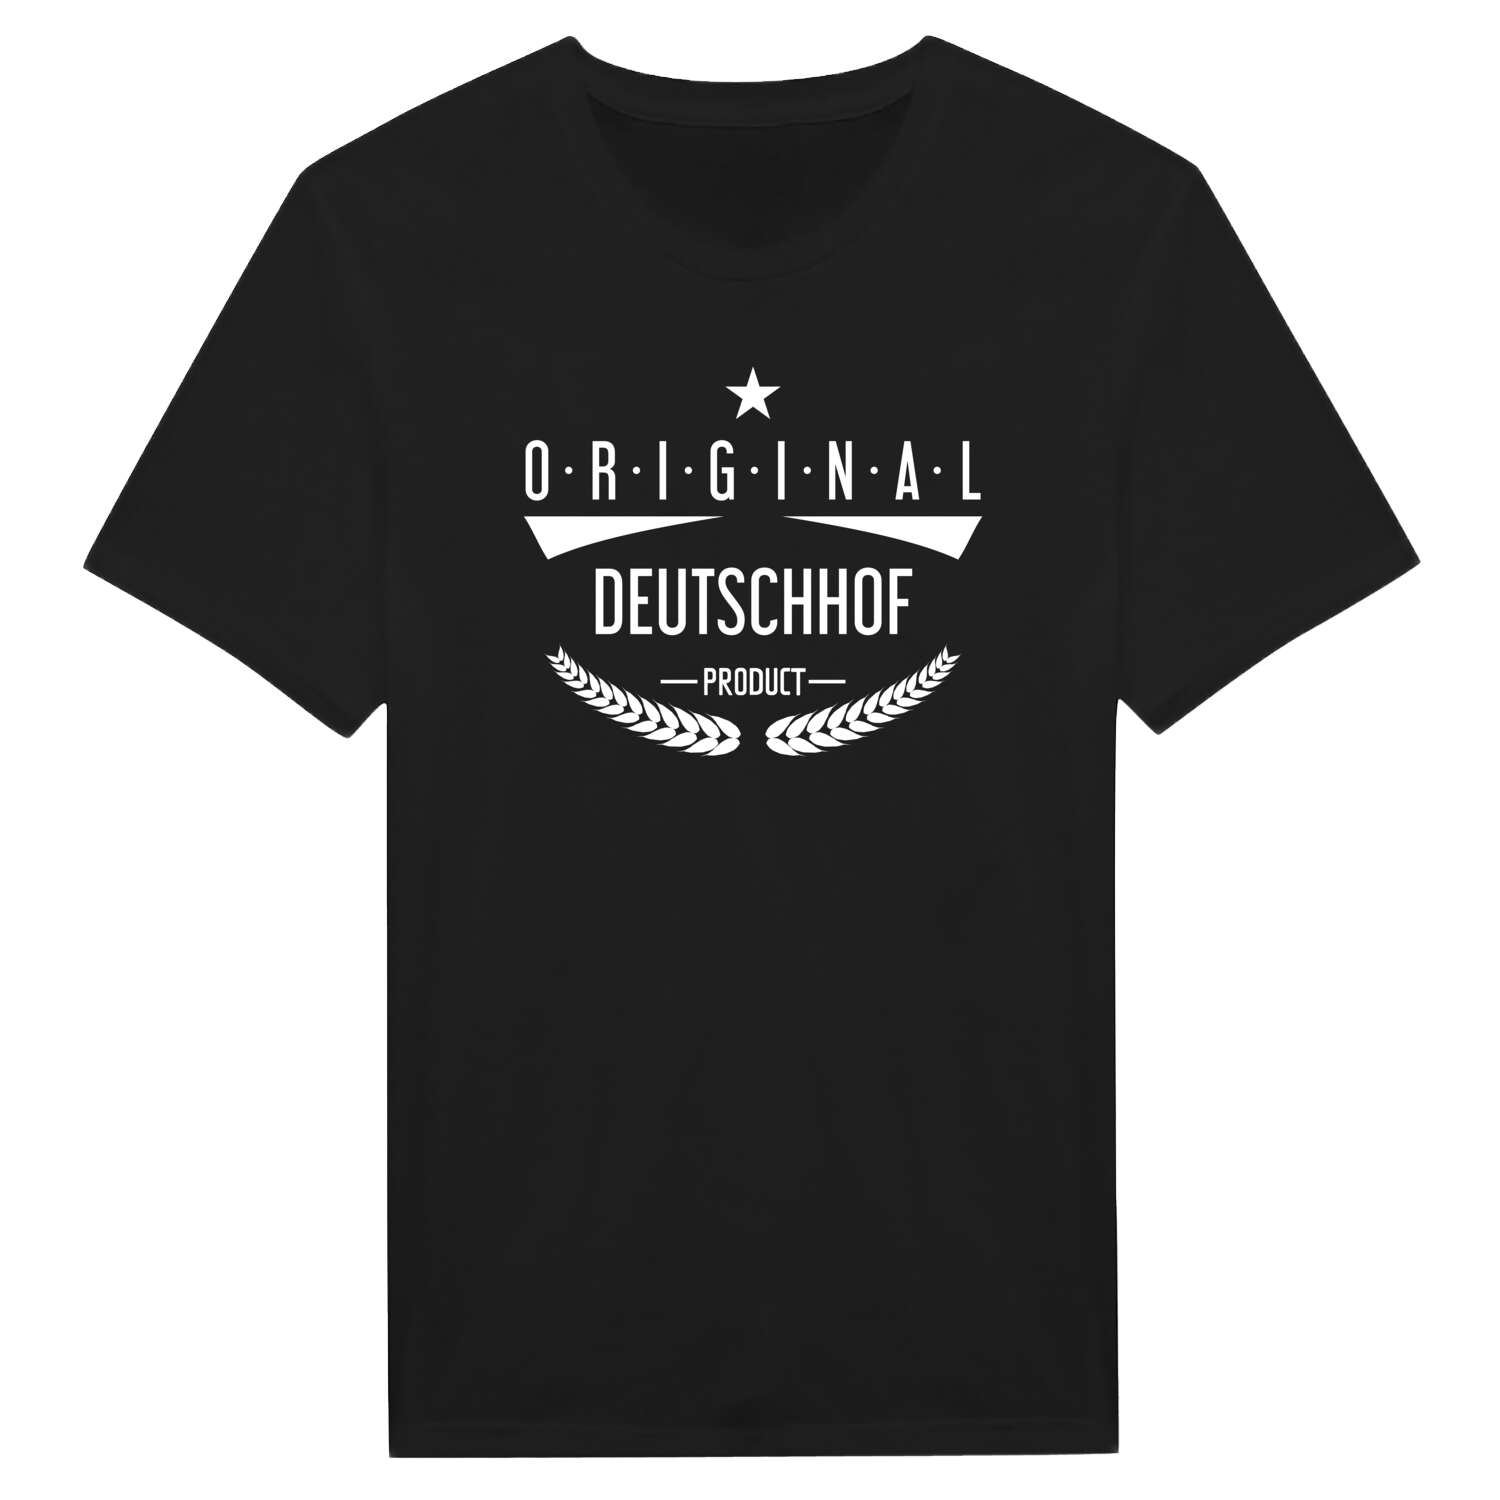 Deutschhof T-Shirt »Original Product«